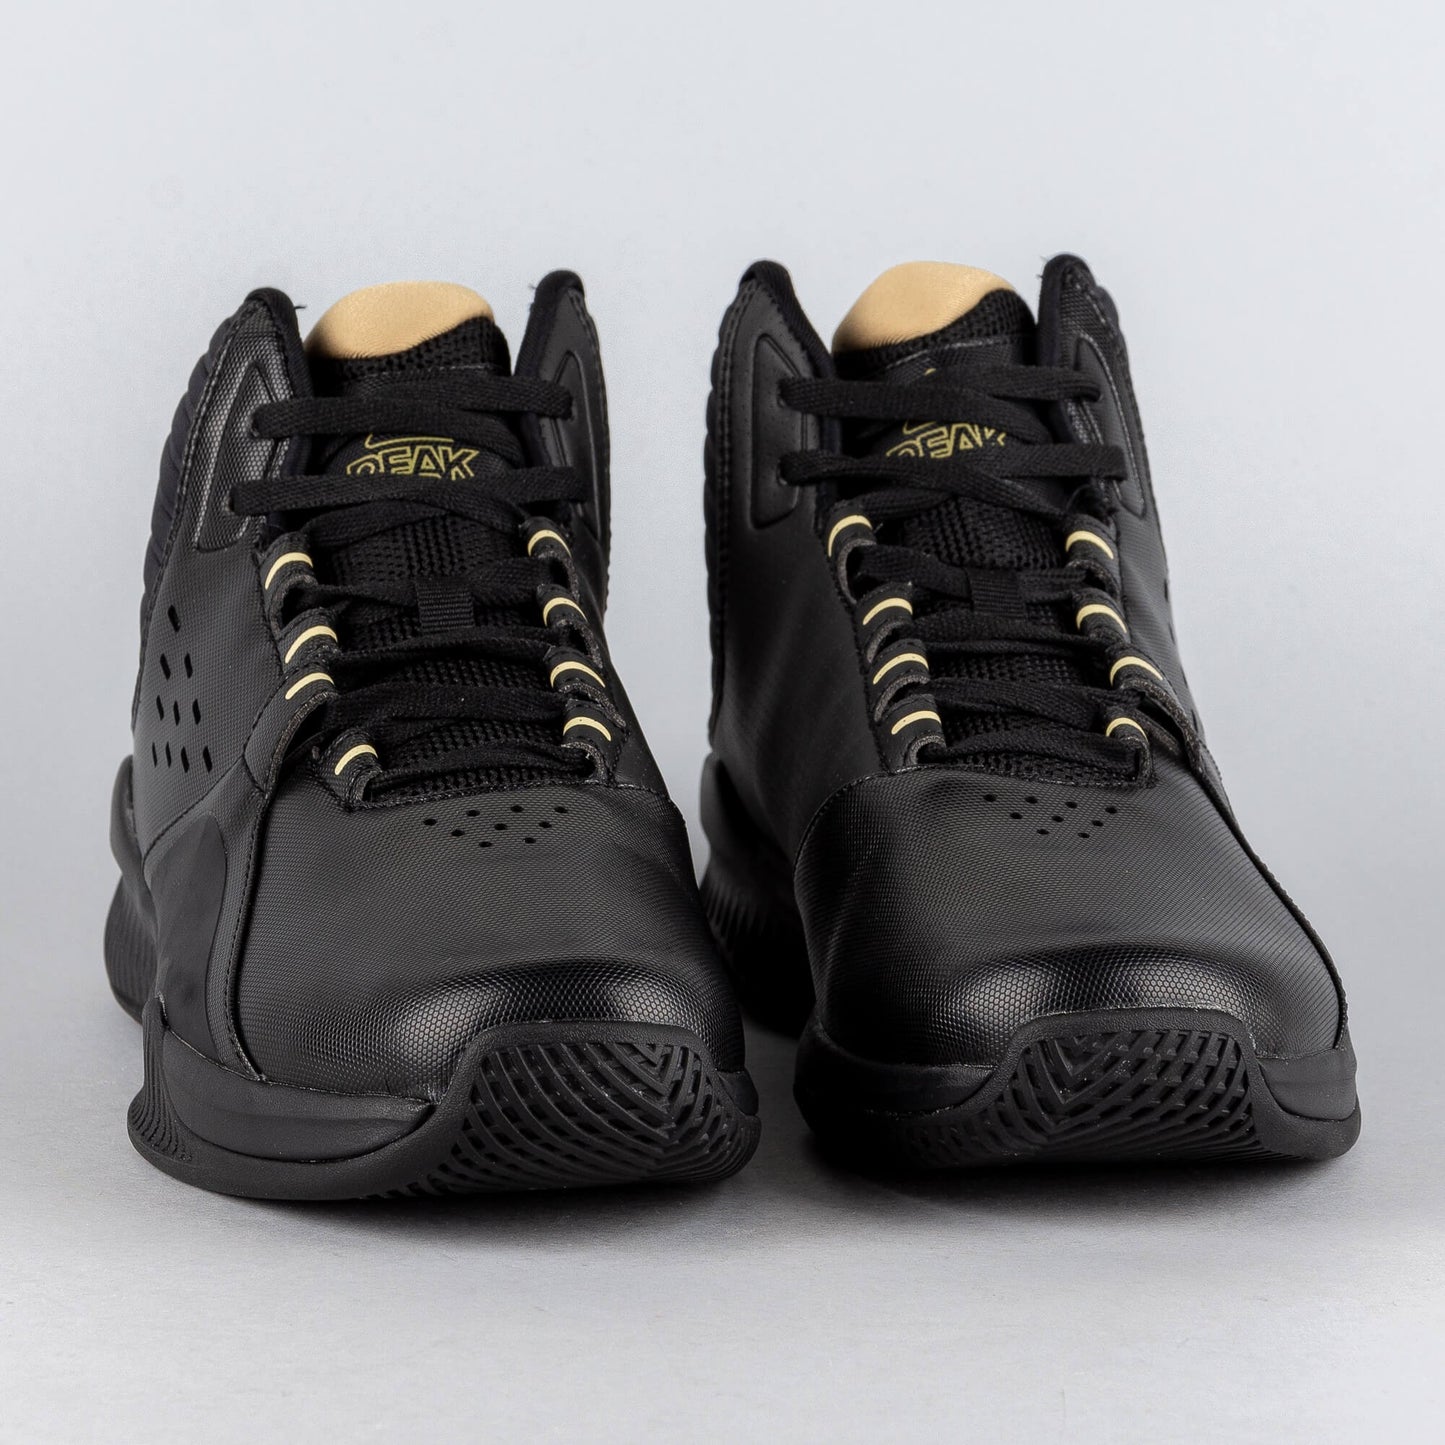 PEAK Rising Star Dynamic Basketball shoes Black